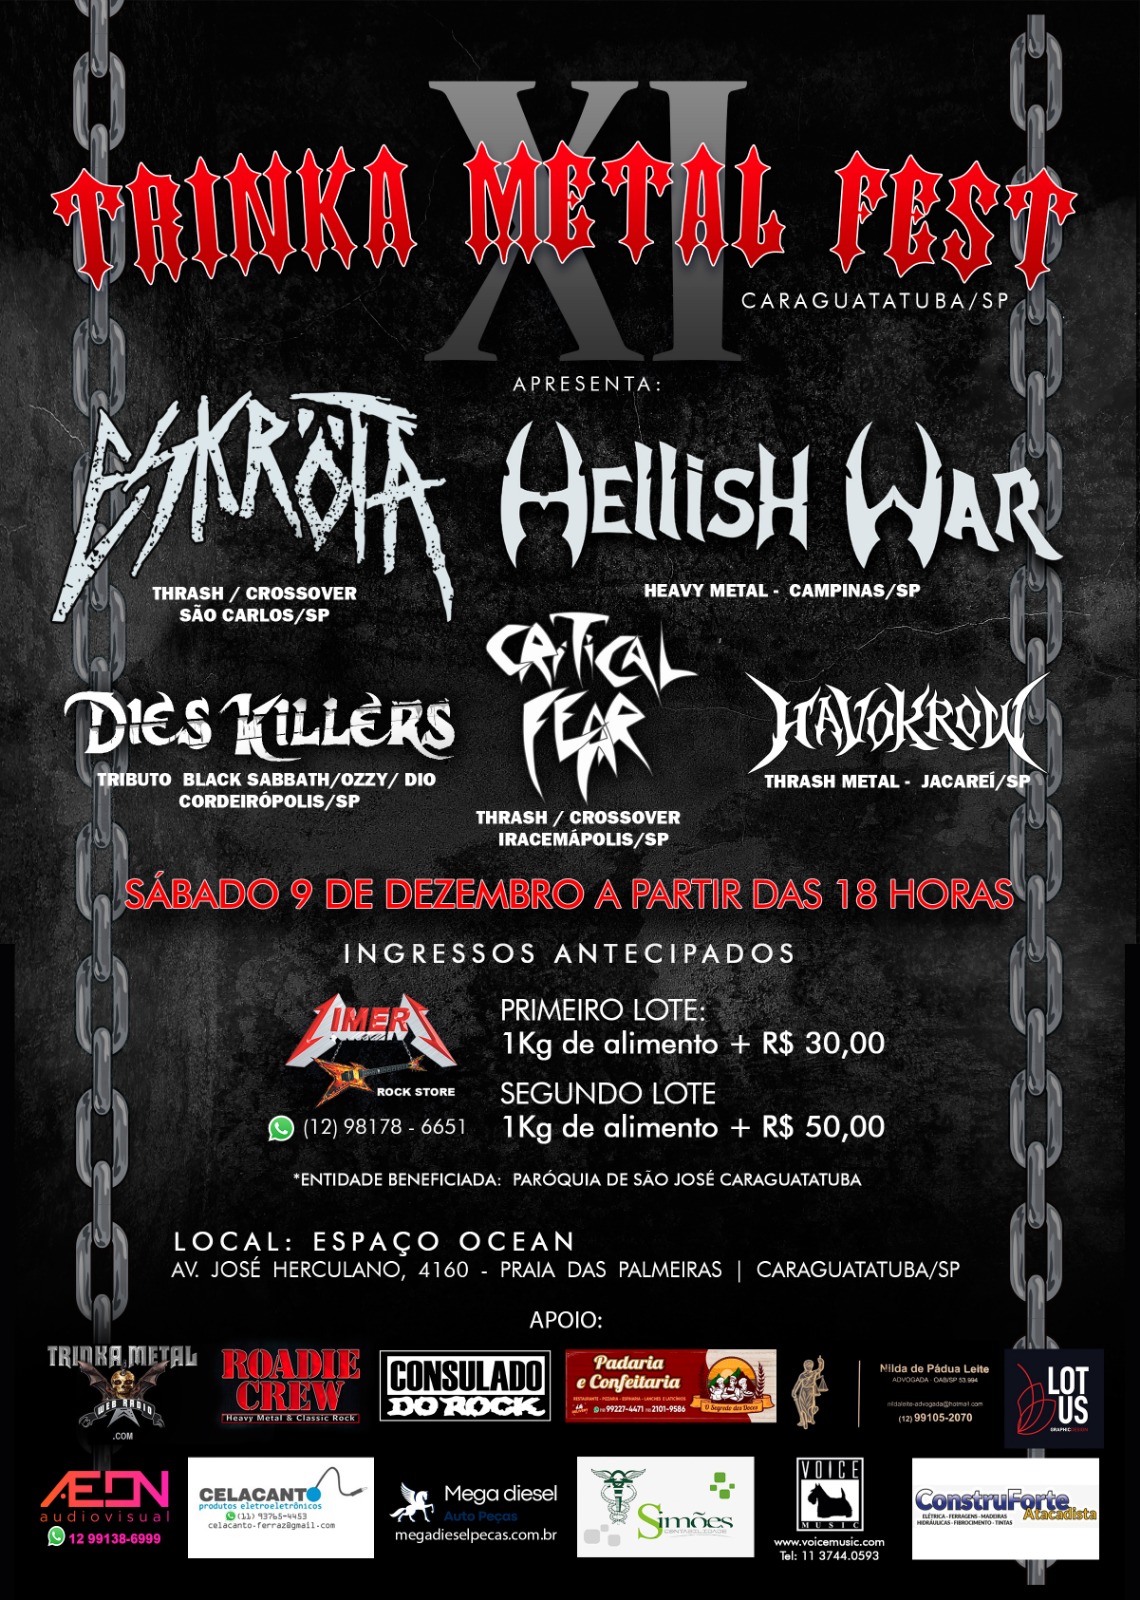 XI Trinka Metal Festival Caraguatatuba S/P 